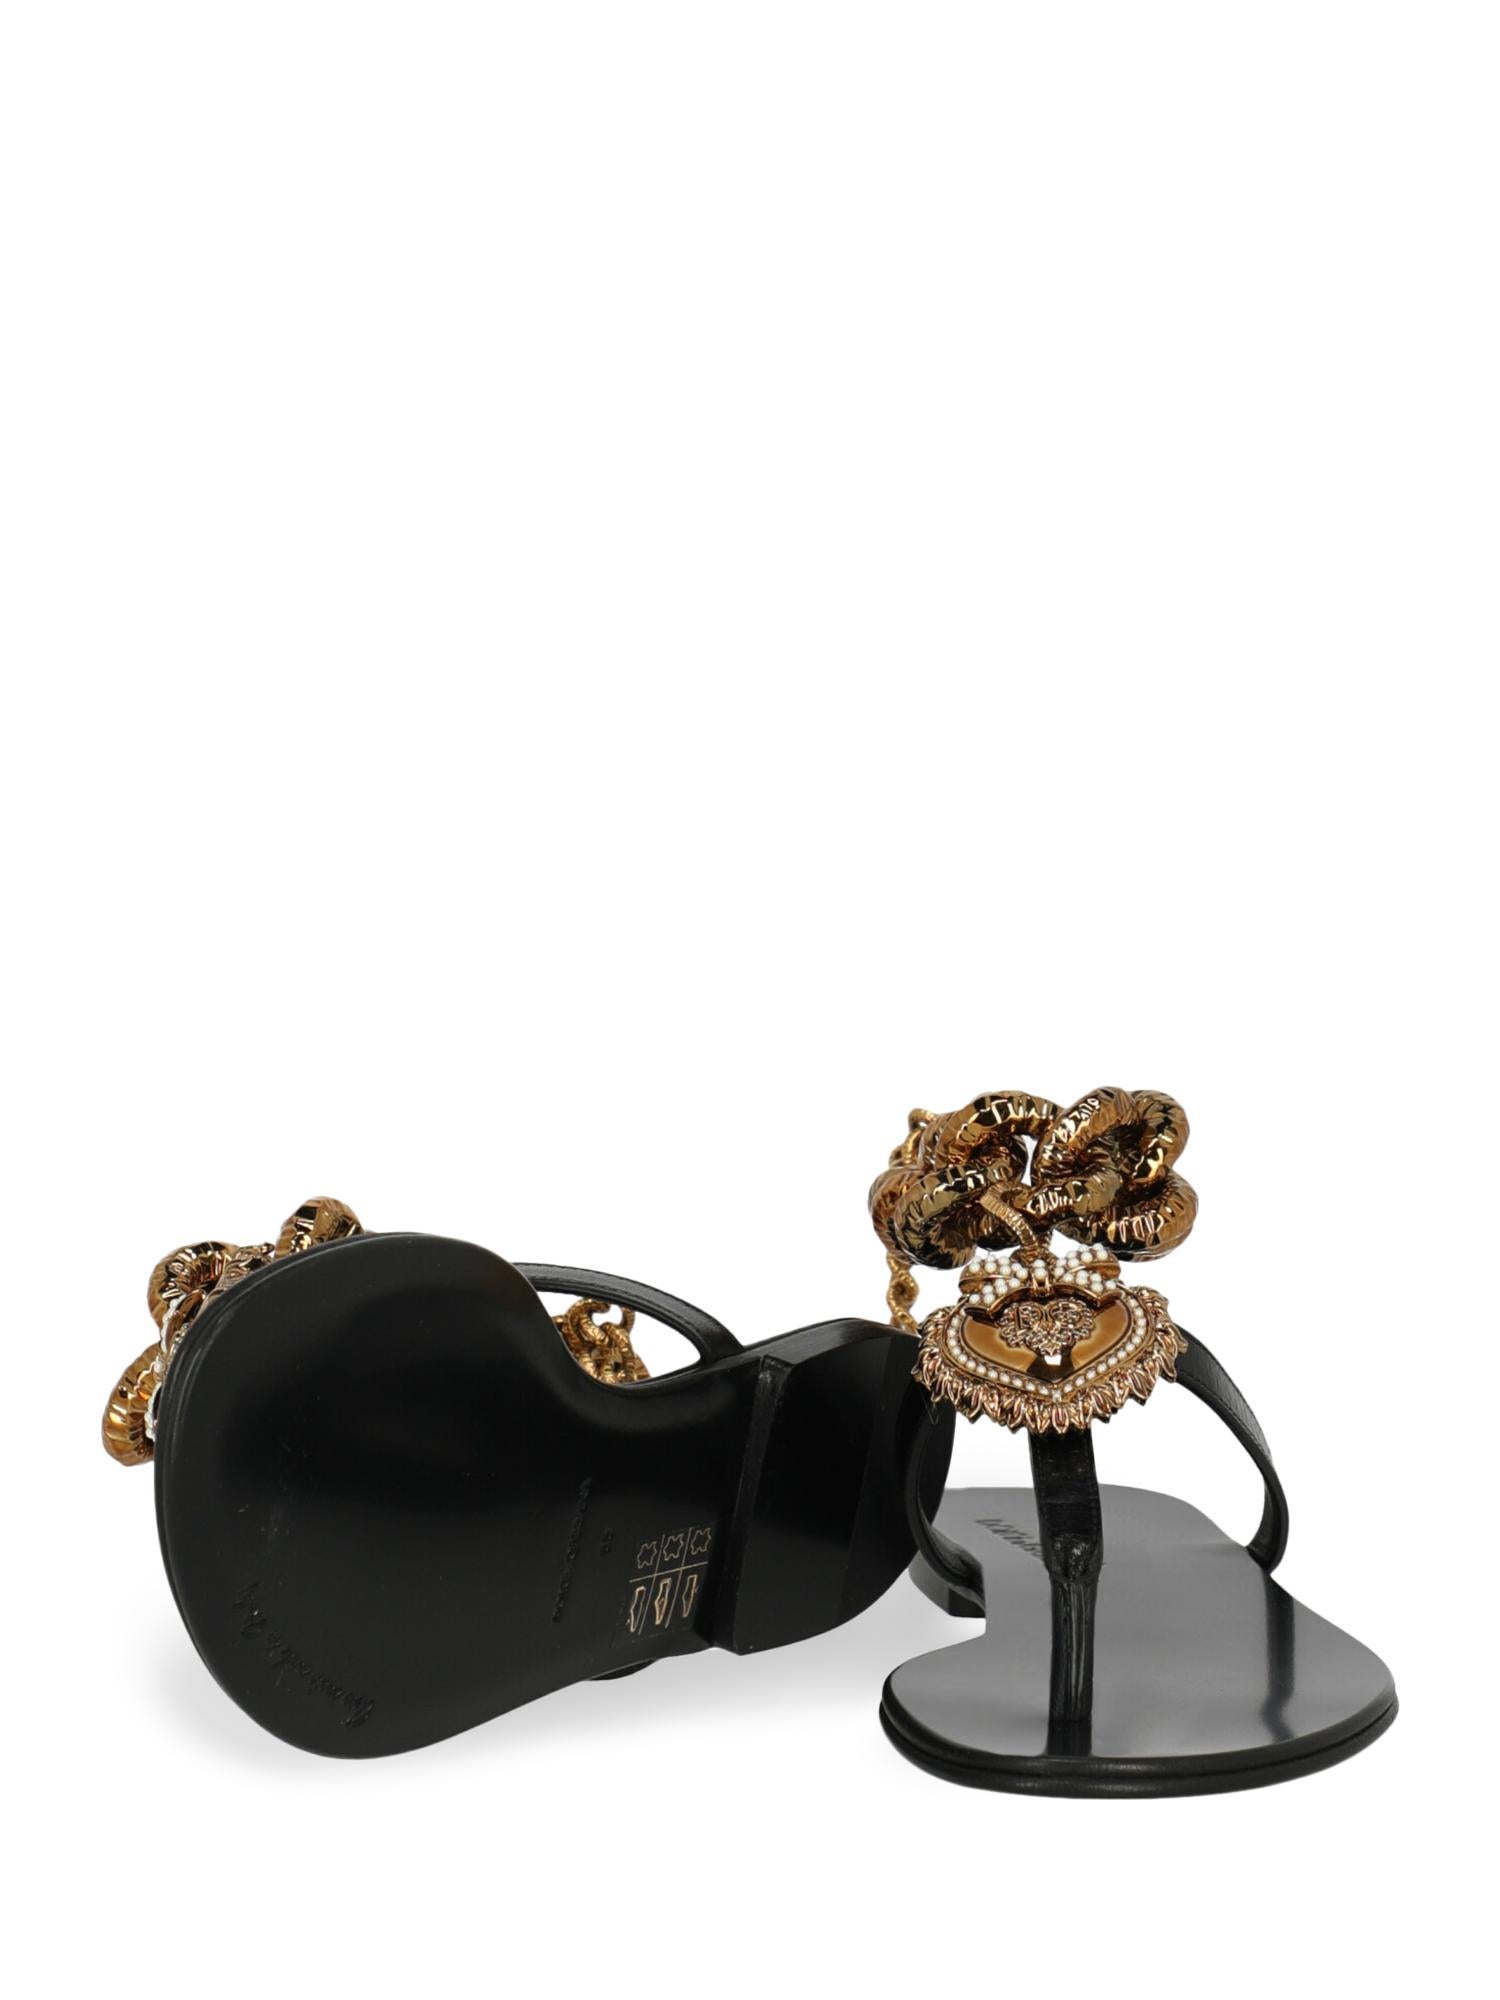 Dolce & Gabbana Woman Flip-flops Black Leather IT 35 For Sale 1